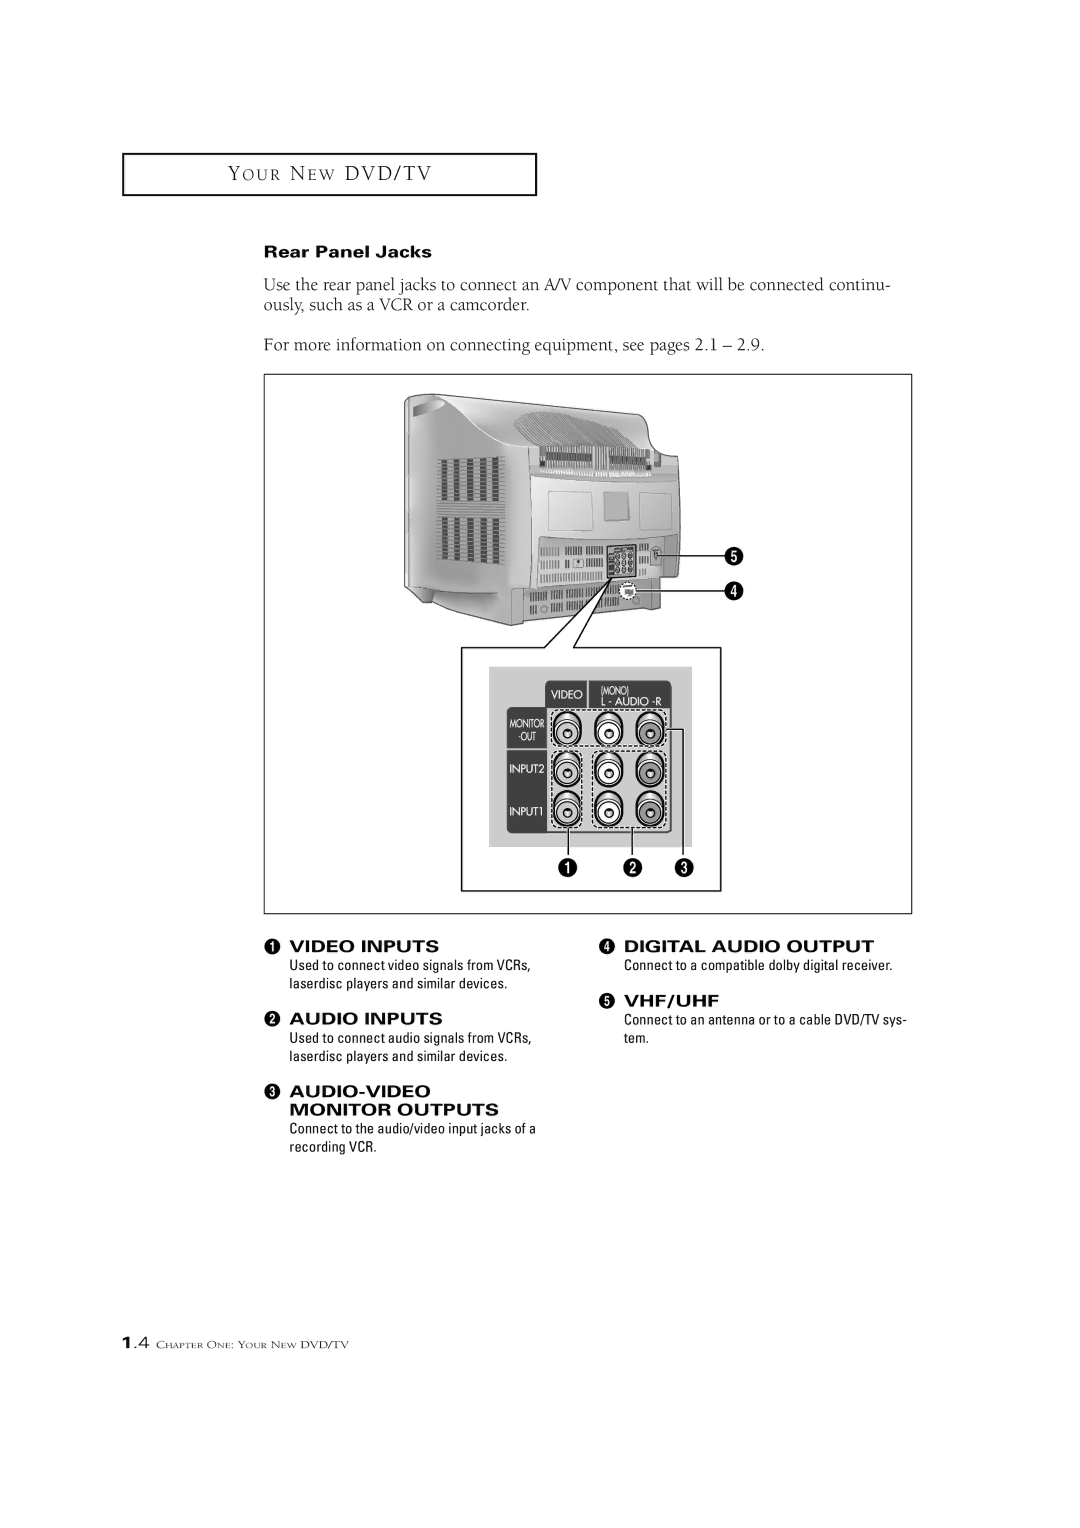 Samsung CSN2077DV manual Rear Panel Jacks, AUDIO-VIDEO Monitor Outputs, Vhf/Uhf 